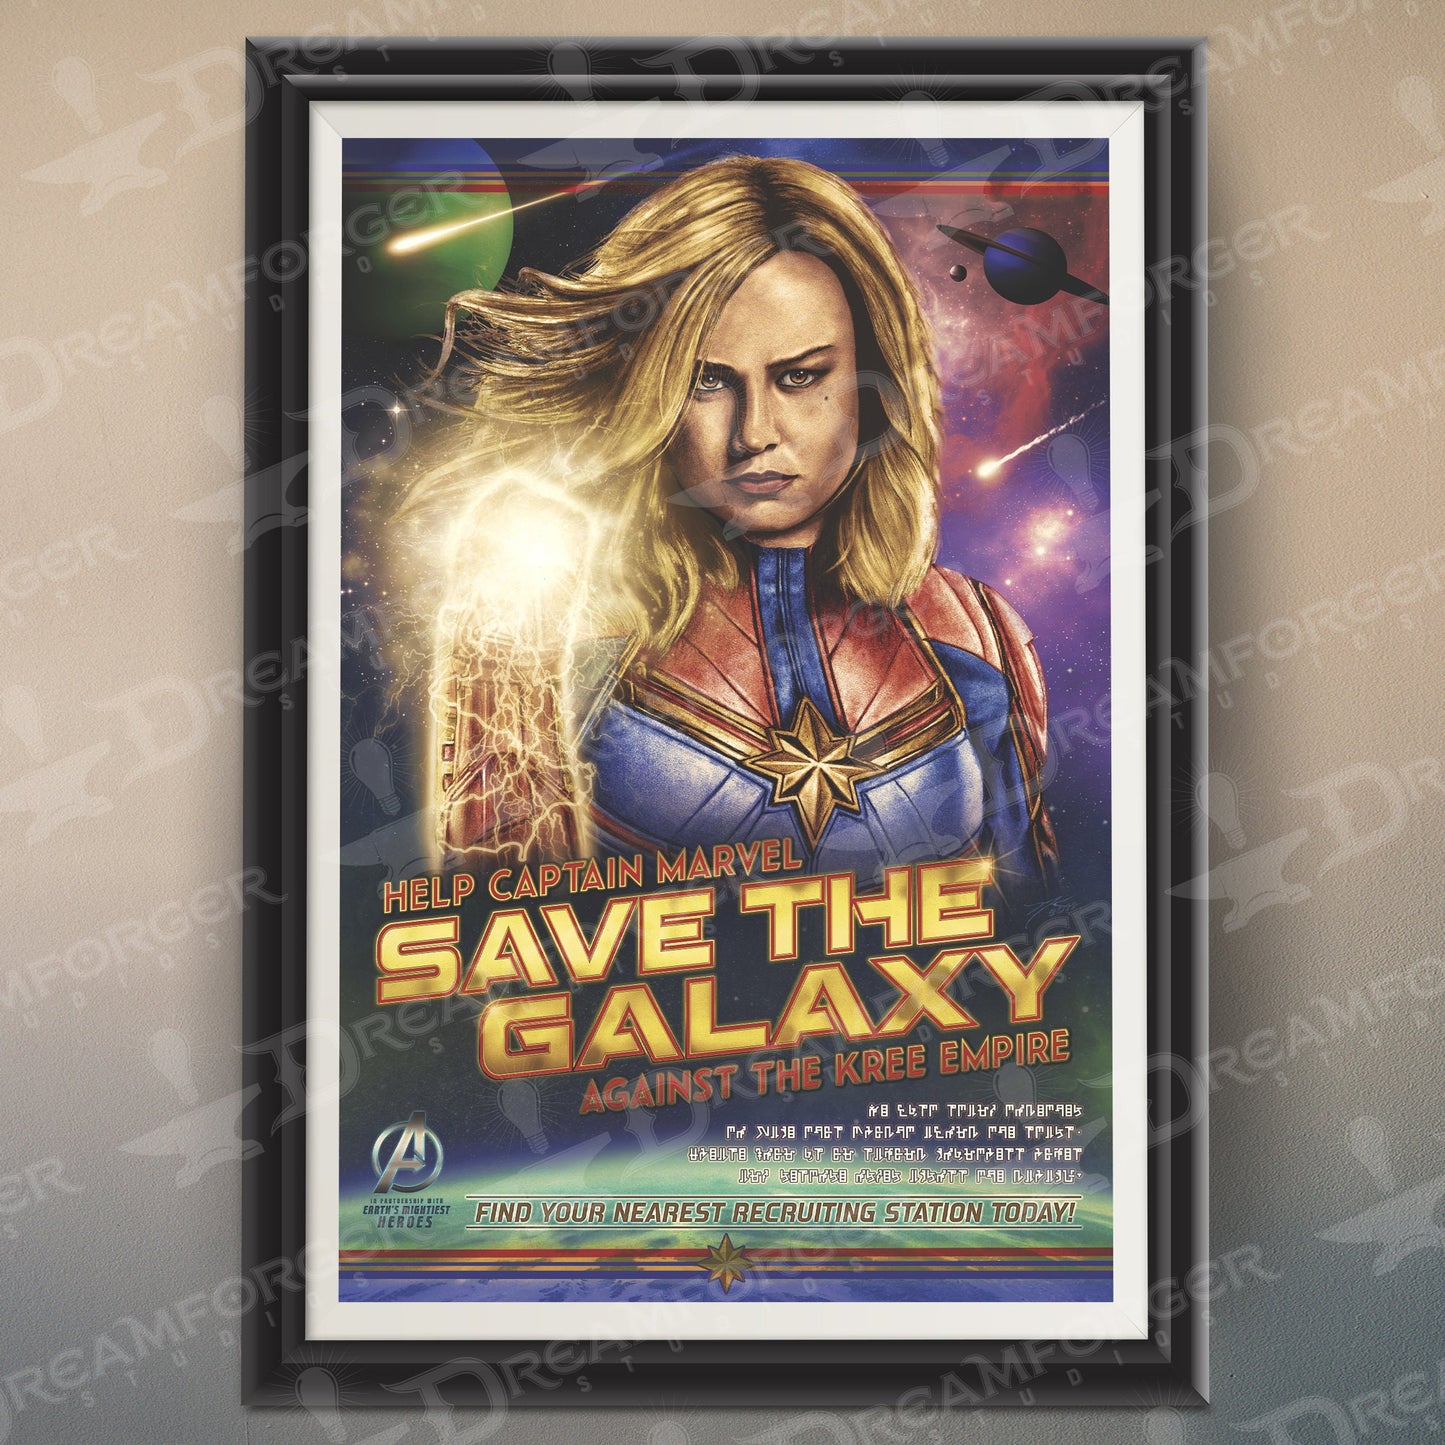 "Captain Marvel Saves the Galaxy" Recruitment Propaganda Poster